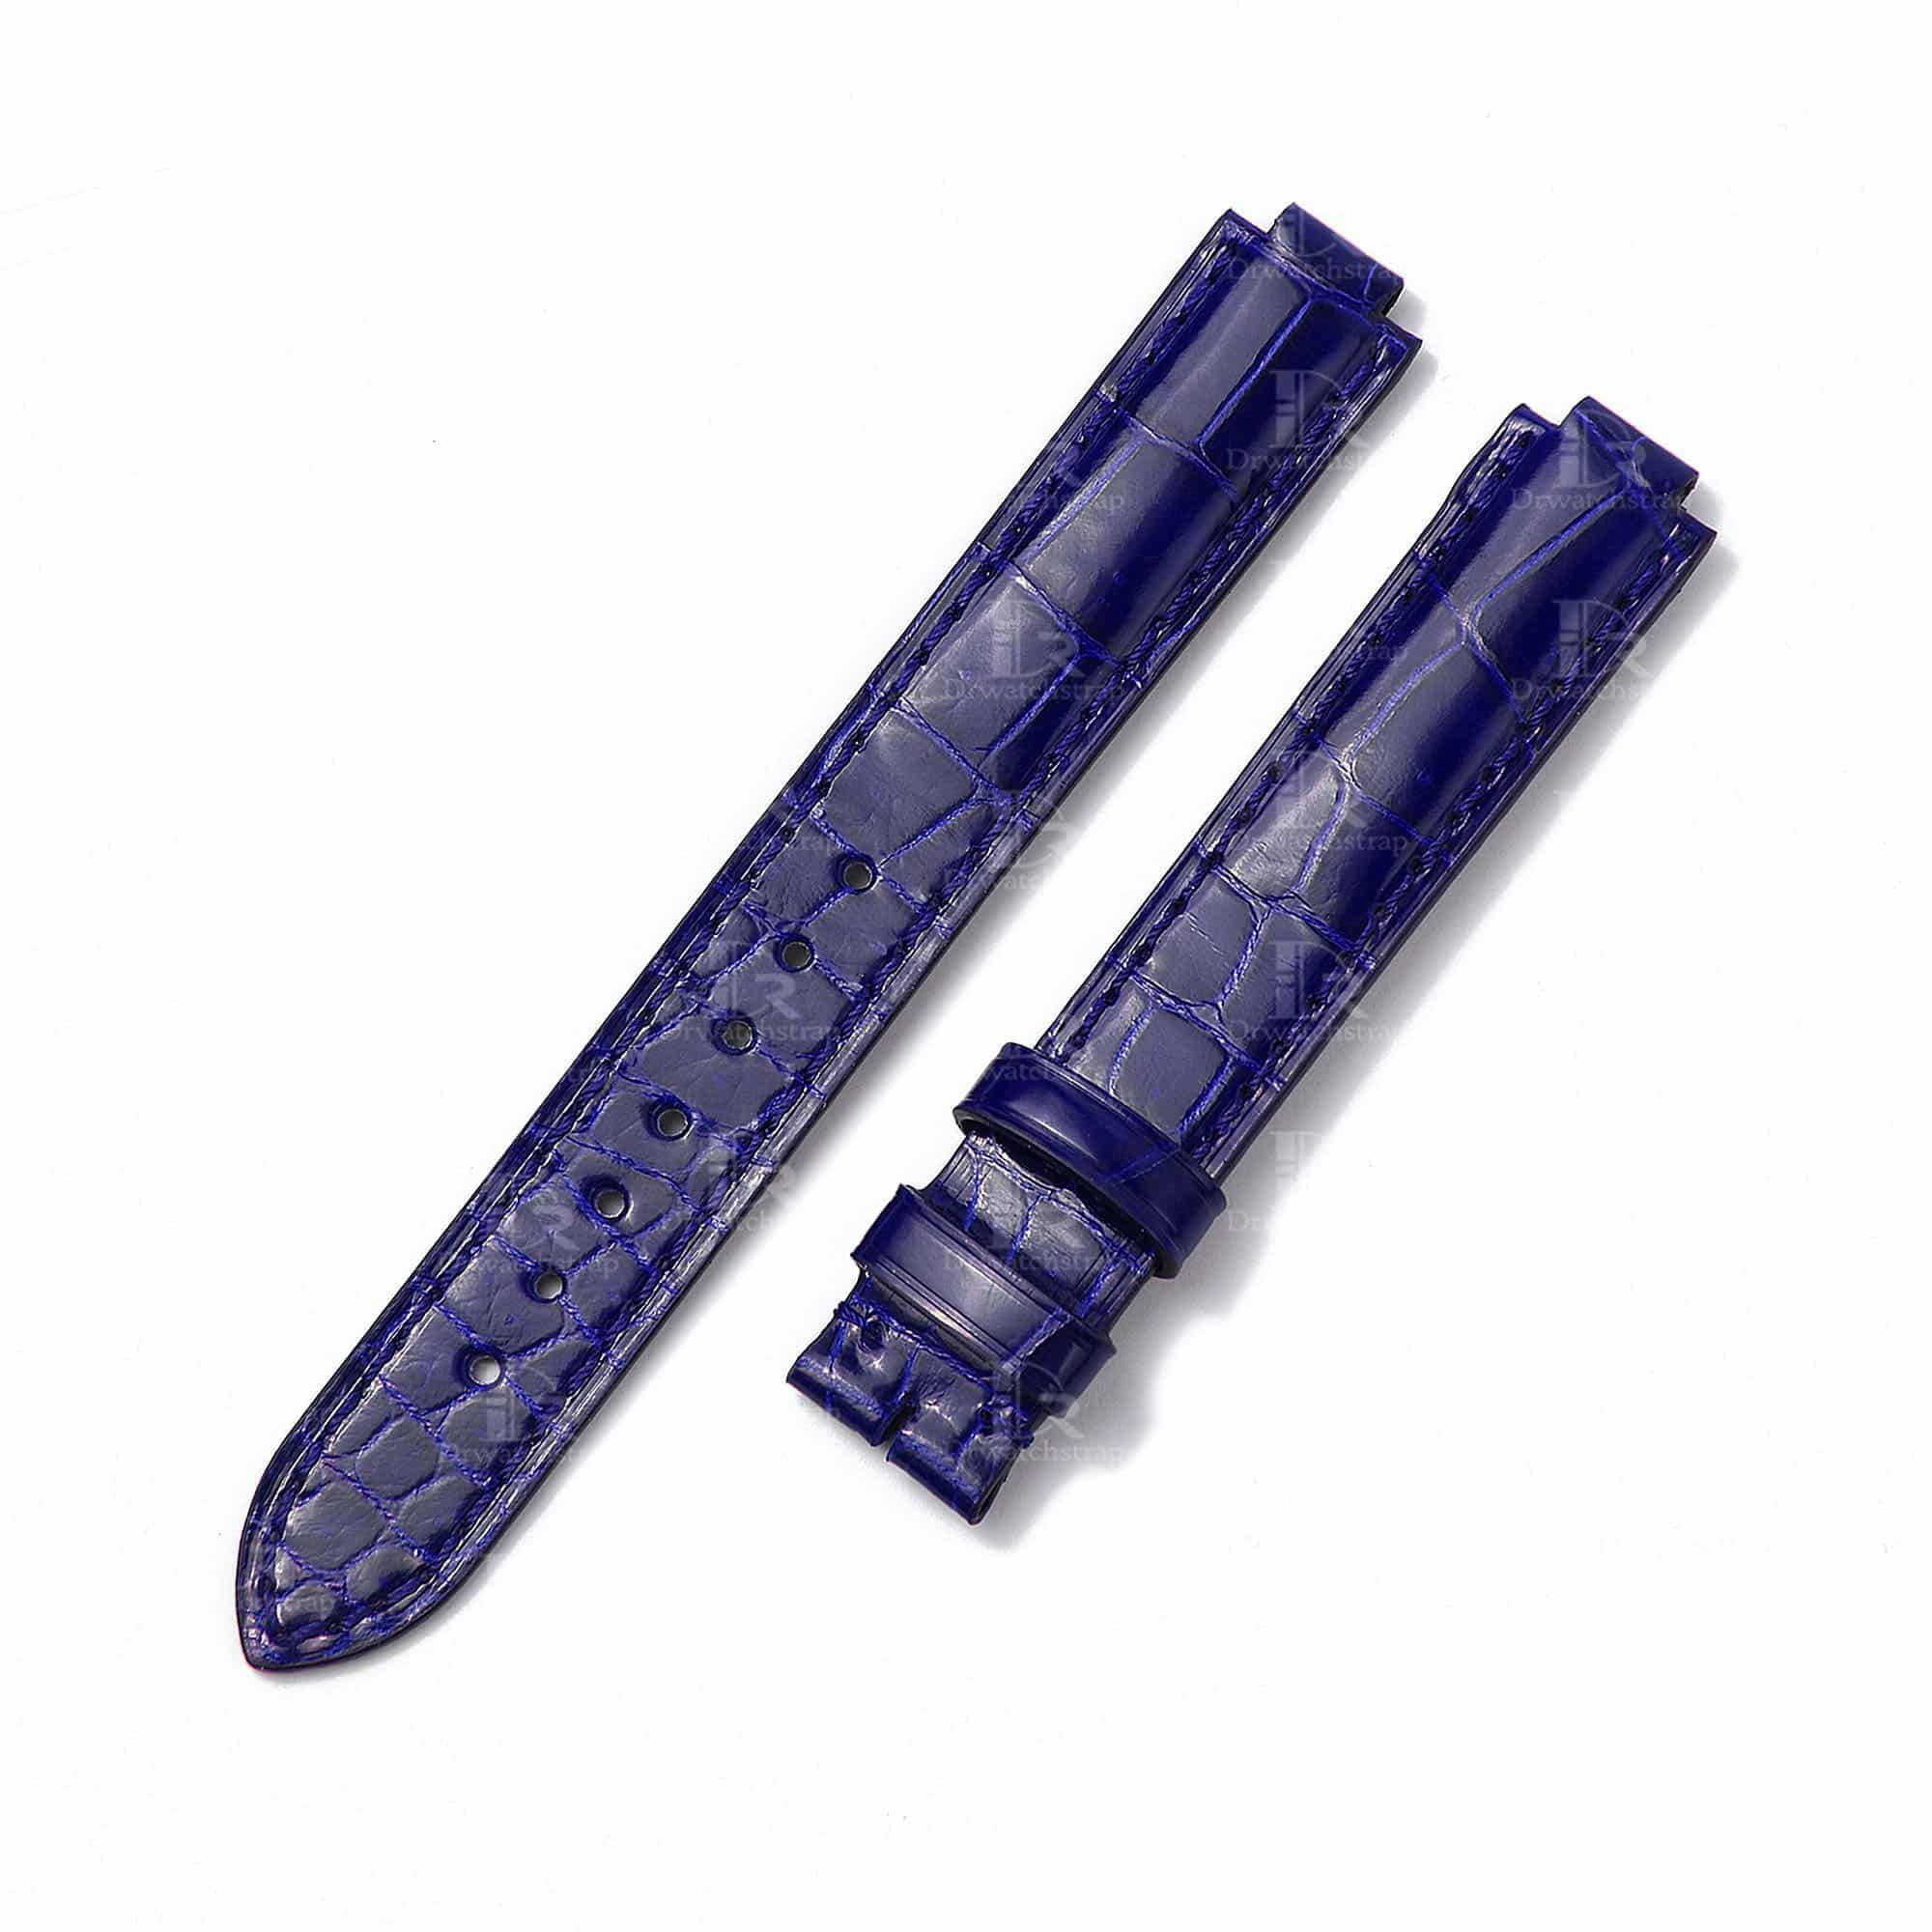 Genuine blue alligator leather watch strap for Cartier Ballon Bleu